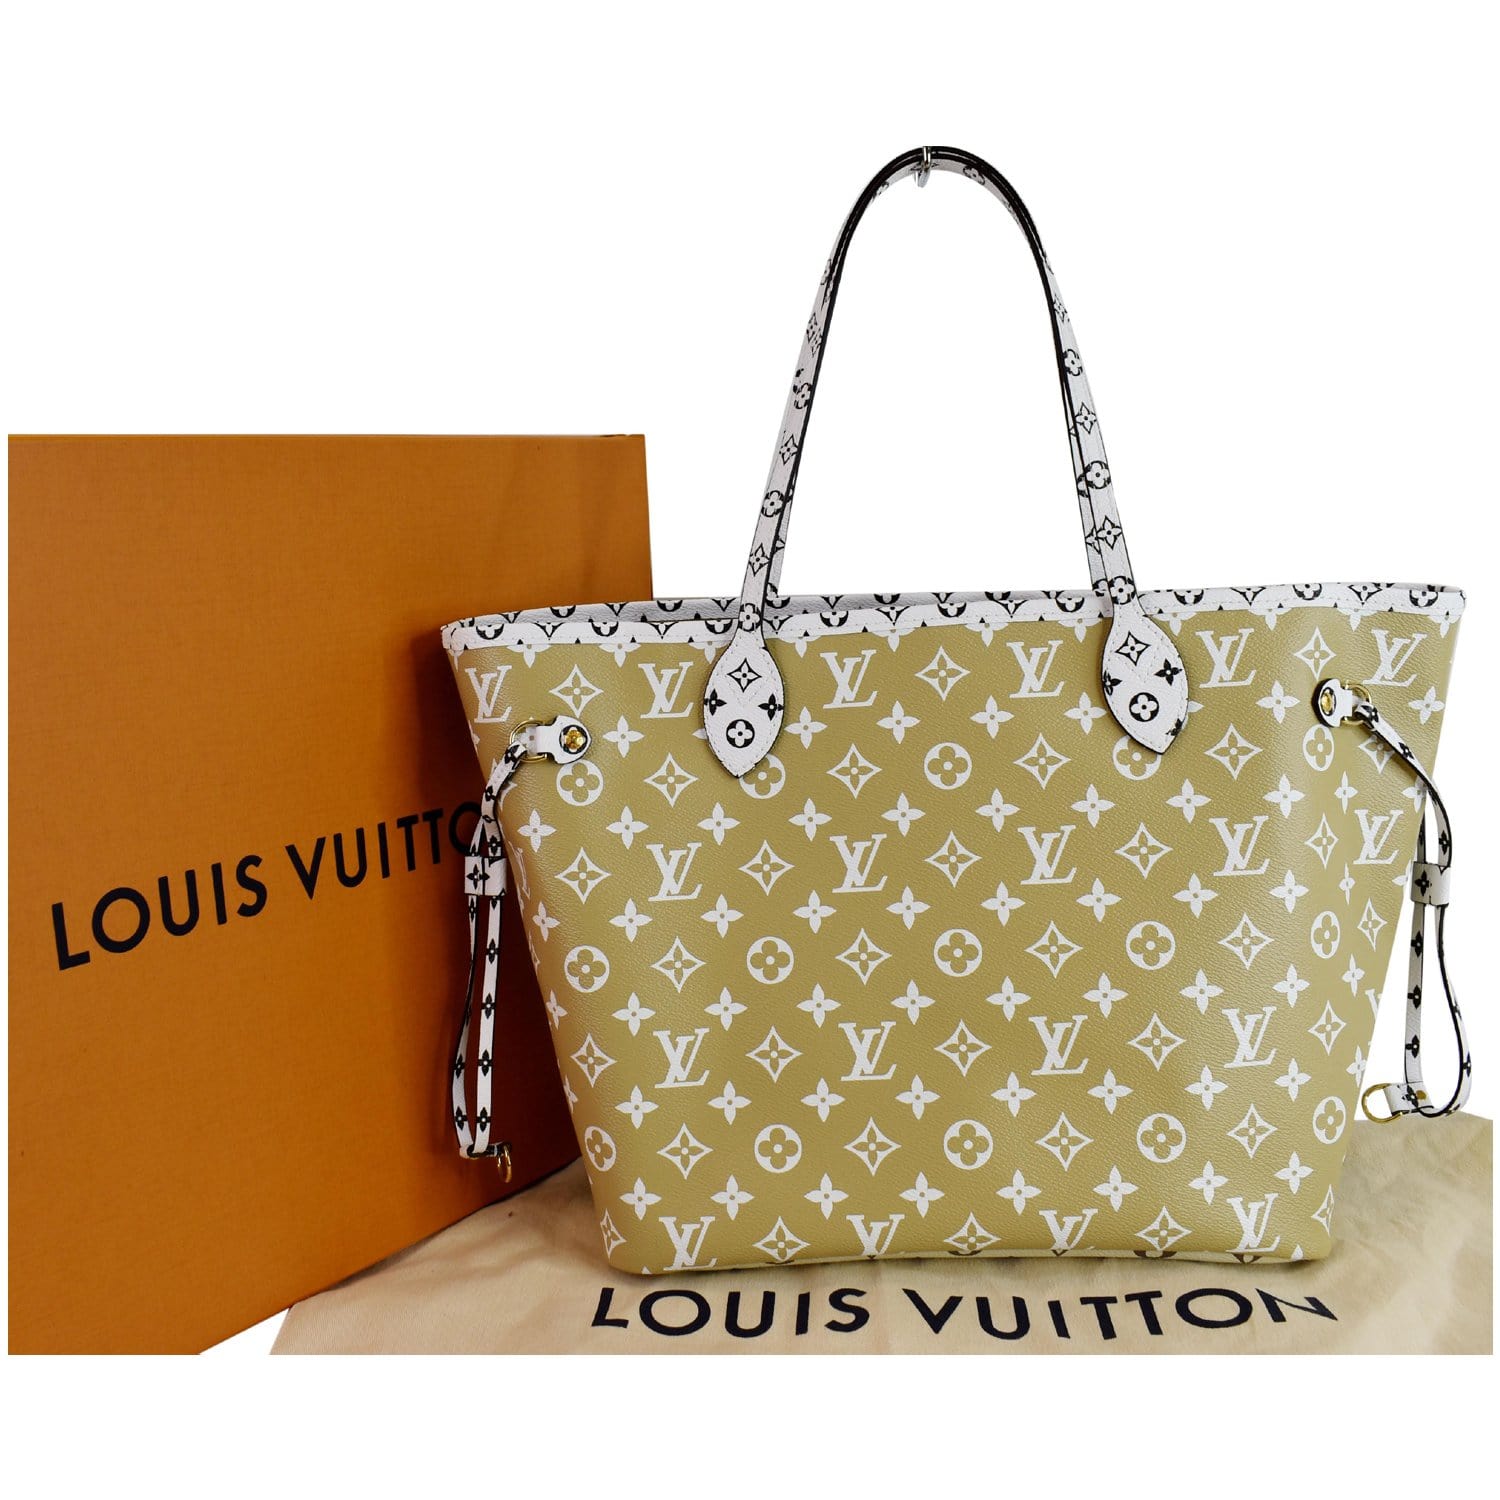 Hot🔥 Or Hmm 🤔💭 Louis Vuitton Giant Monogram $2100